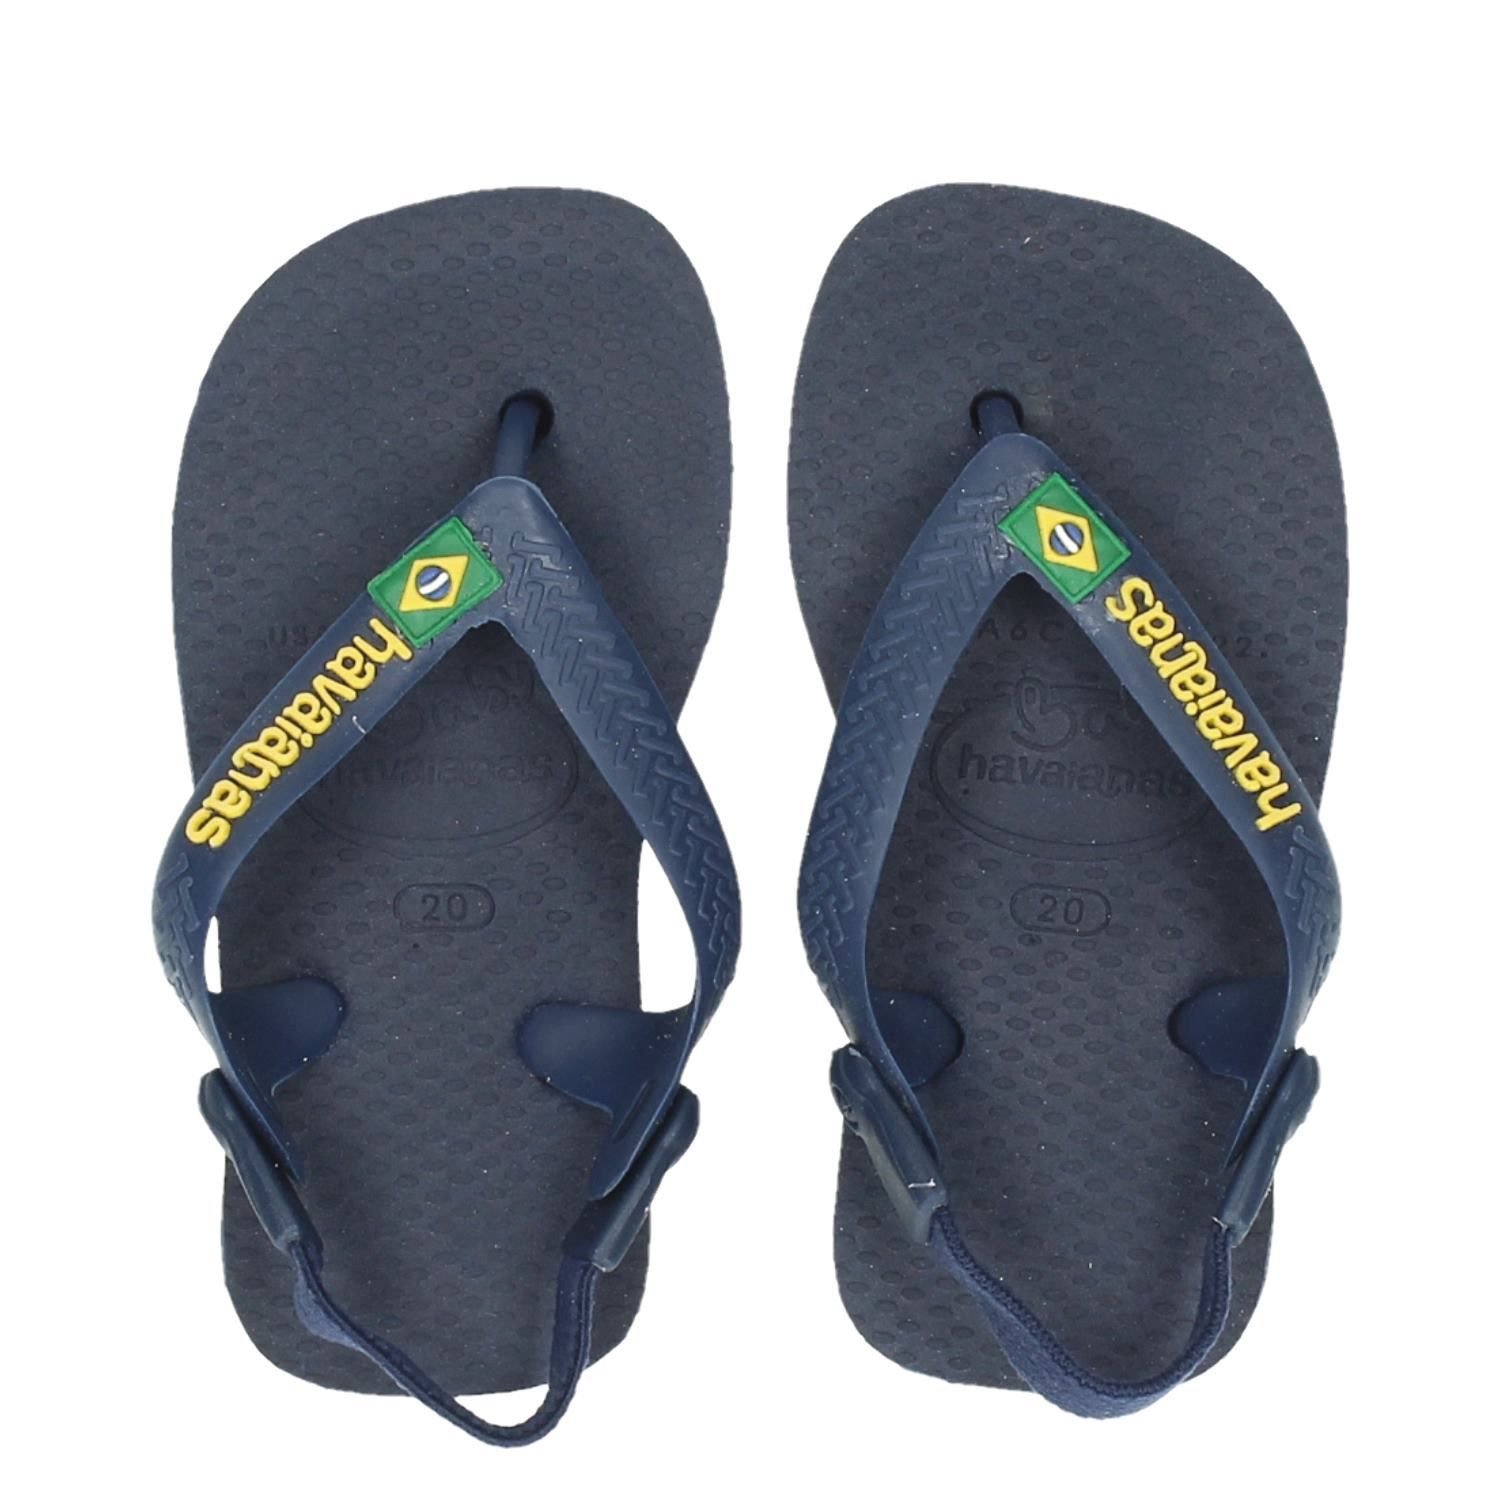 Encommium James Dyson Tussendoortje Havaianas slippers donkerblauw Jongens ( - baby brasil logo4140577) -  Junior Steps